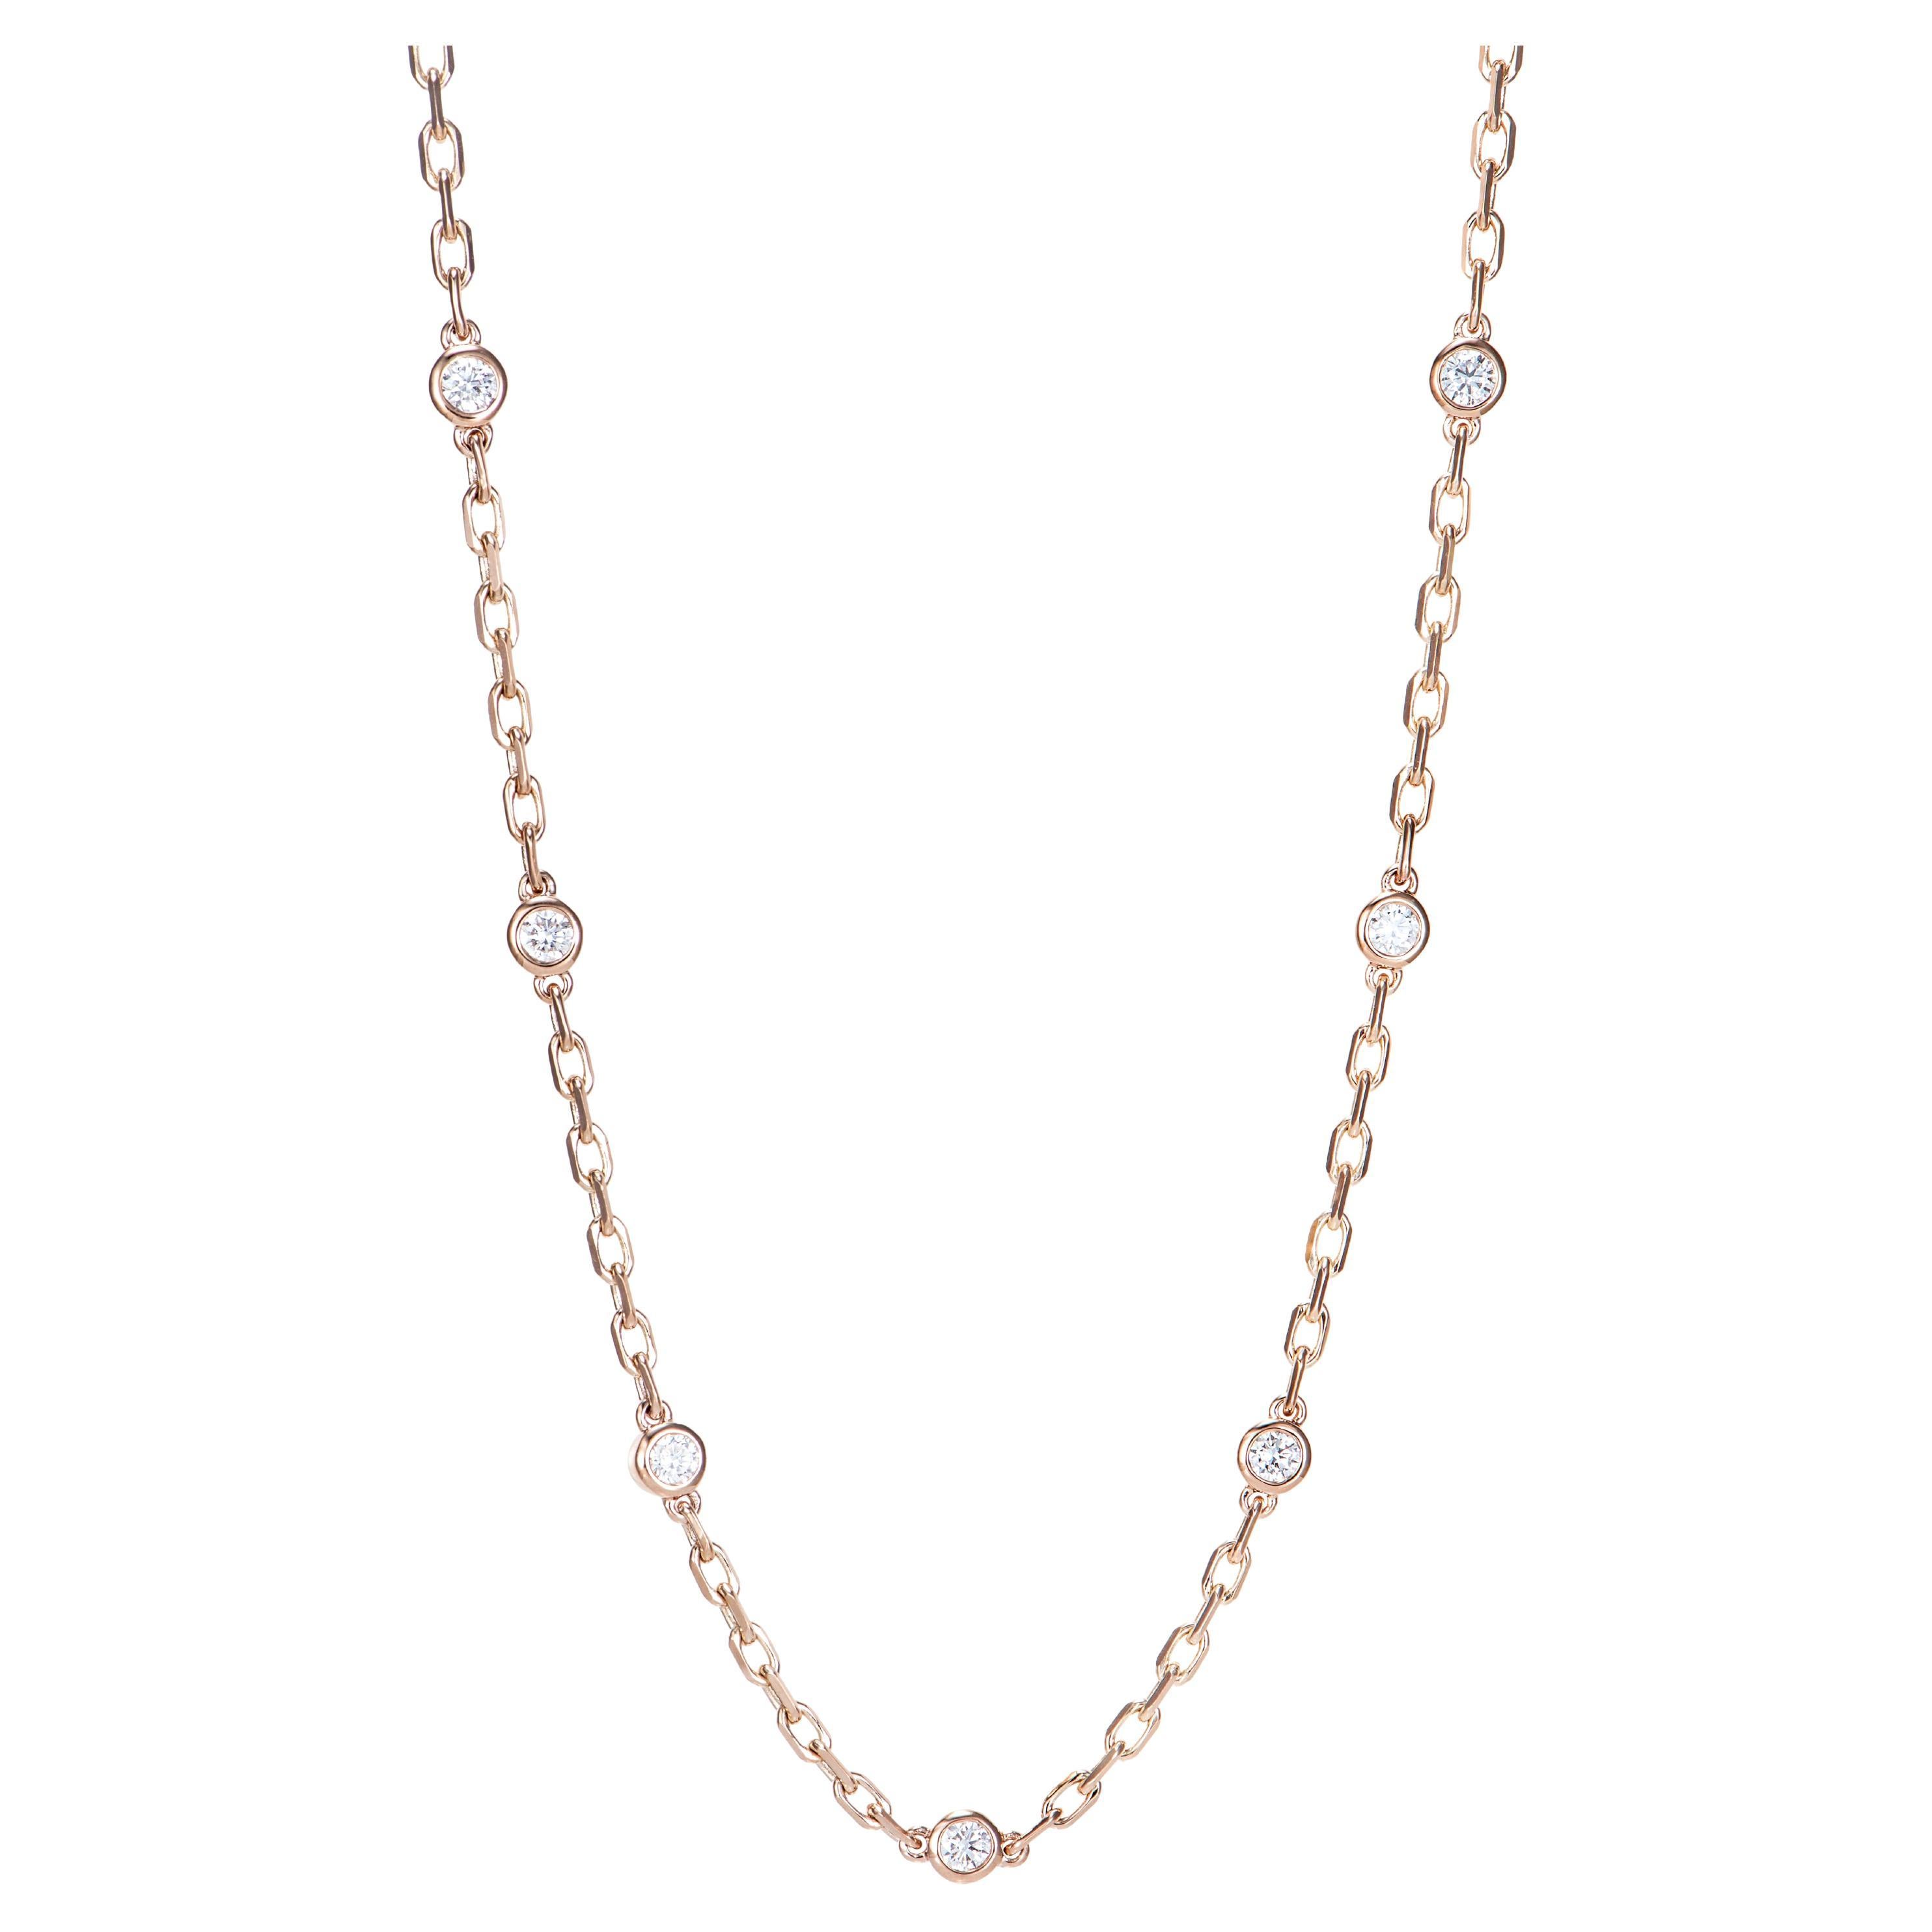 1.66 Carat Diamond Chain Necklace in 18 Karat Rose Gold.